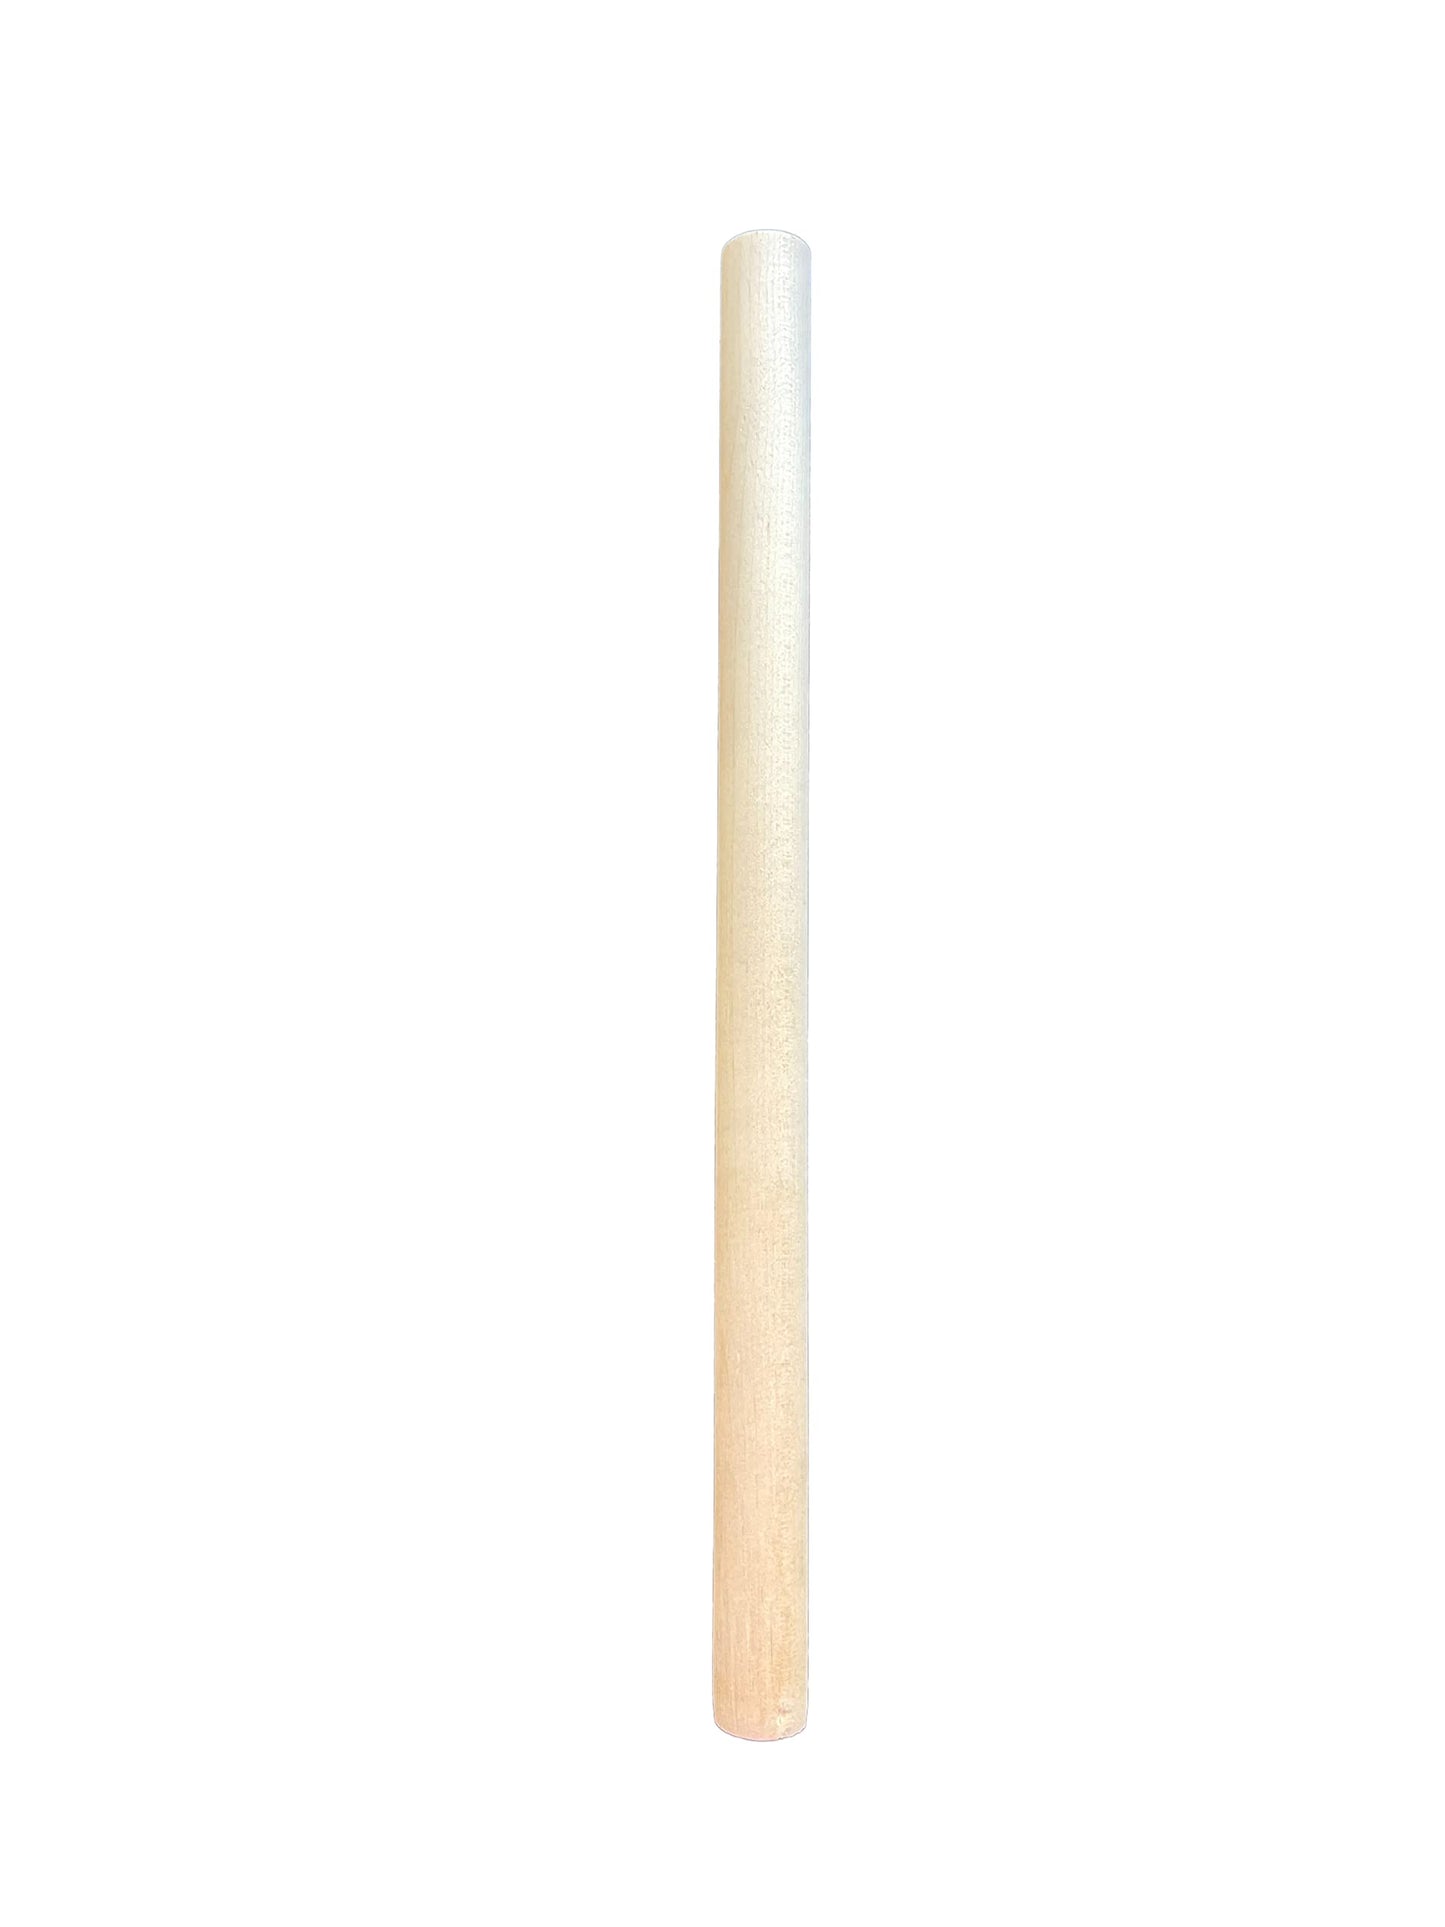 3/4 x 12 Inch Dowel Rods Wood Sticks Unfinished Hardwood (1)